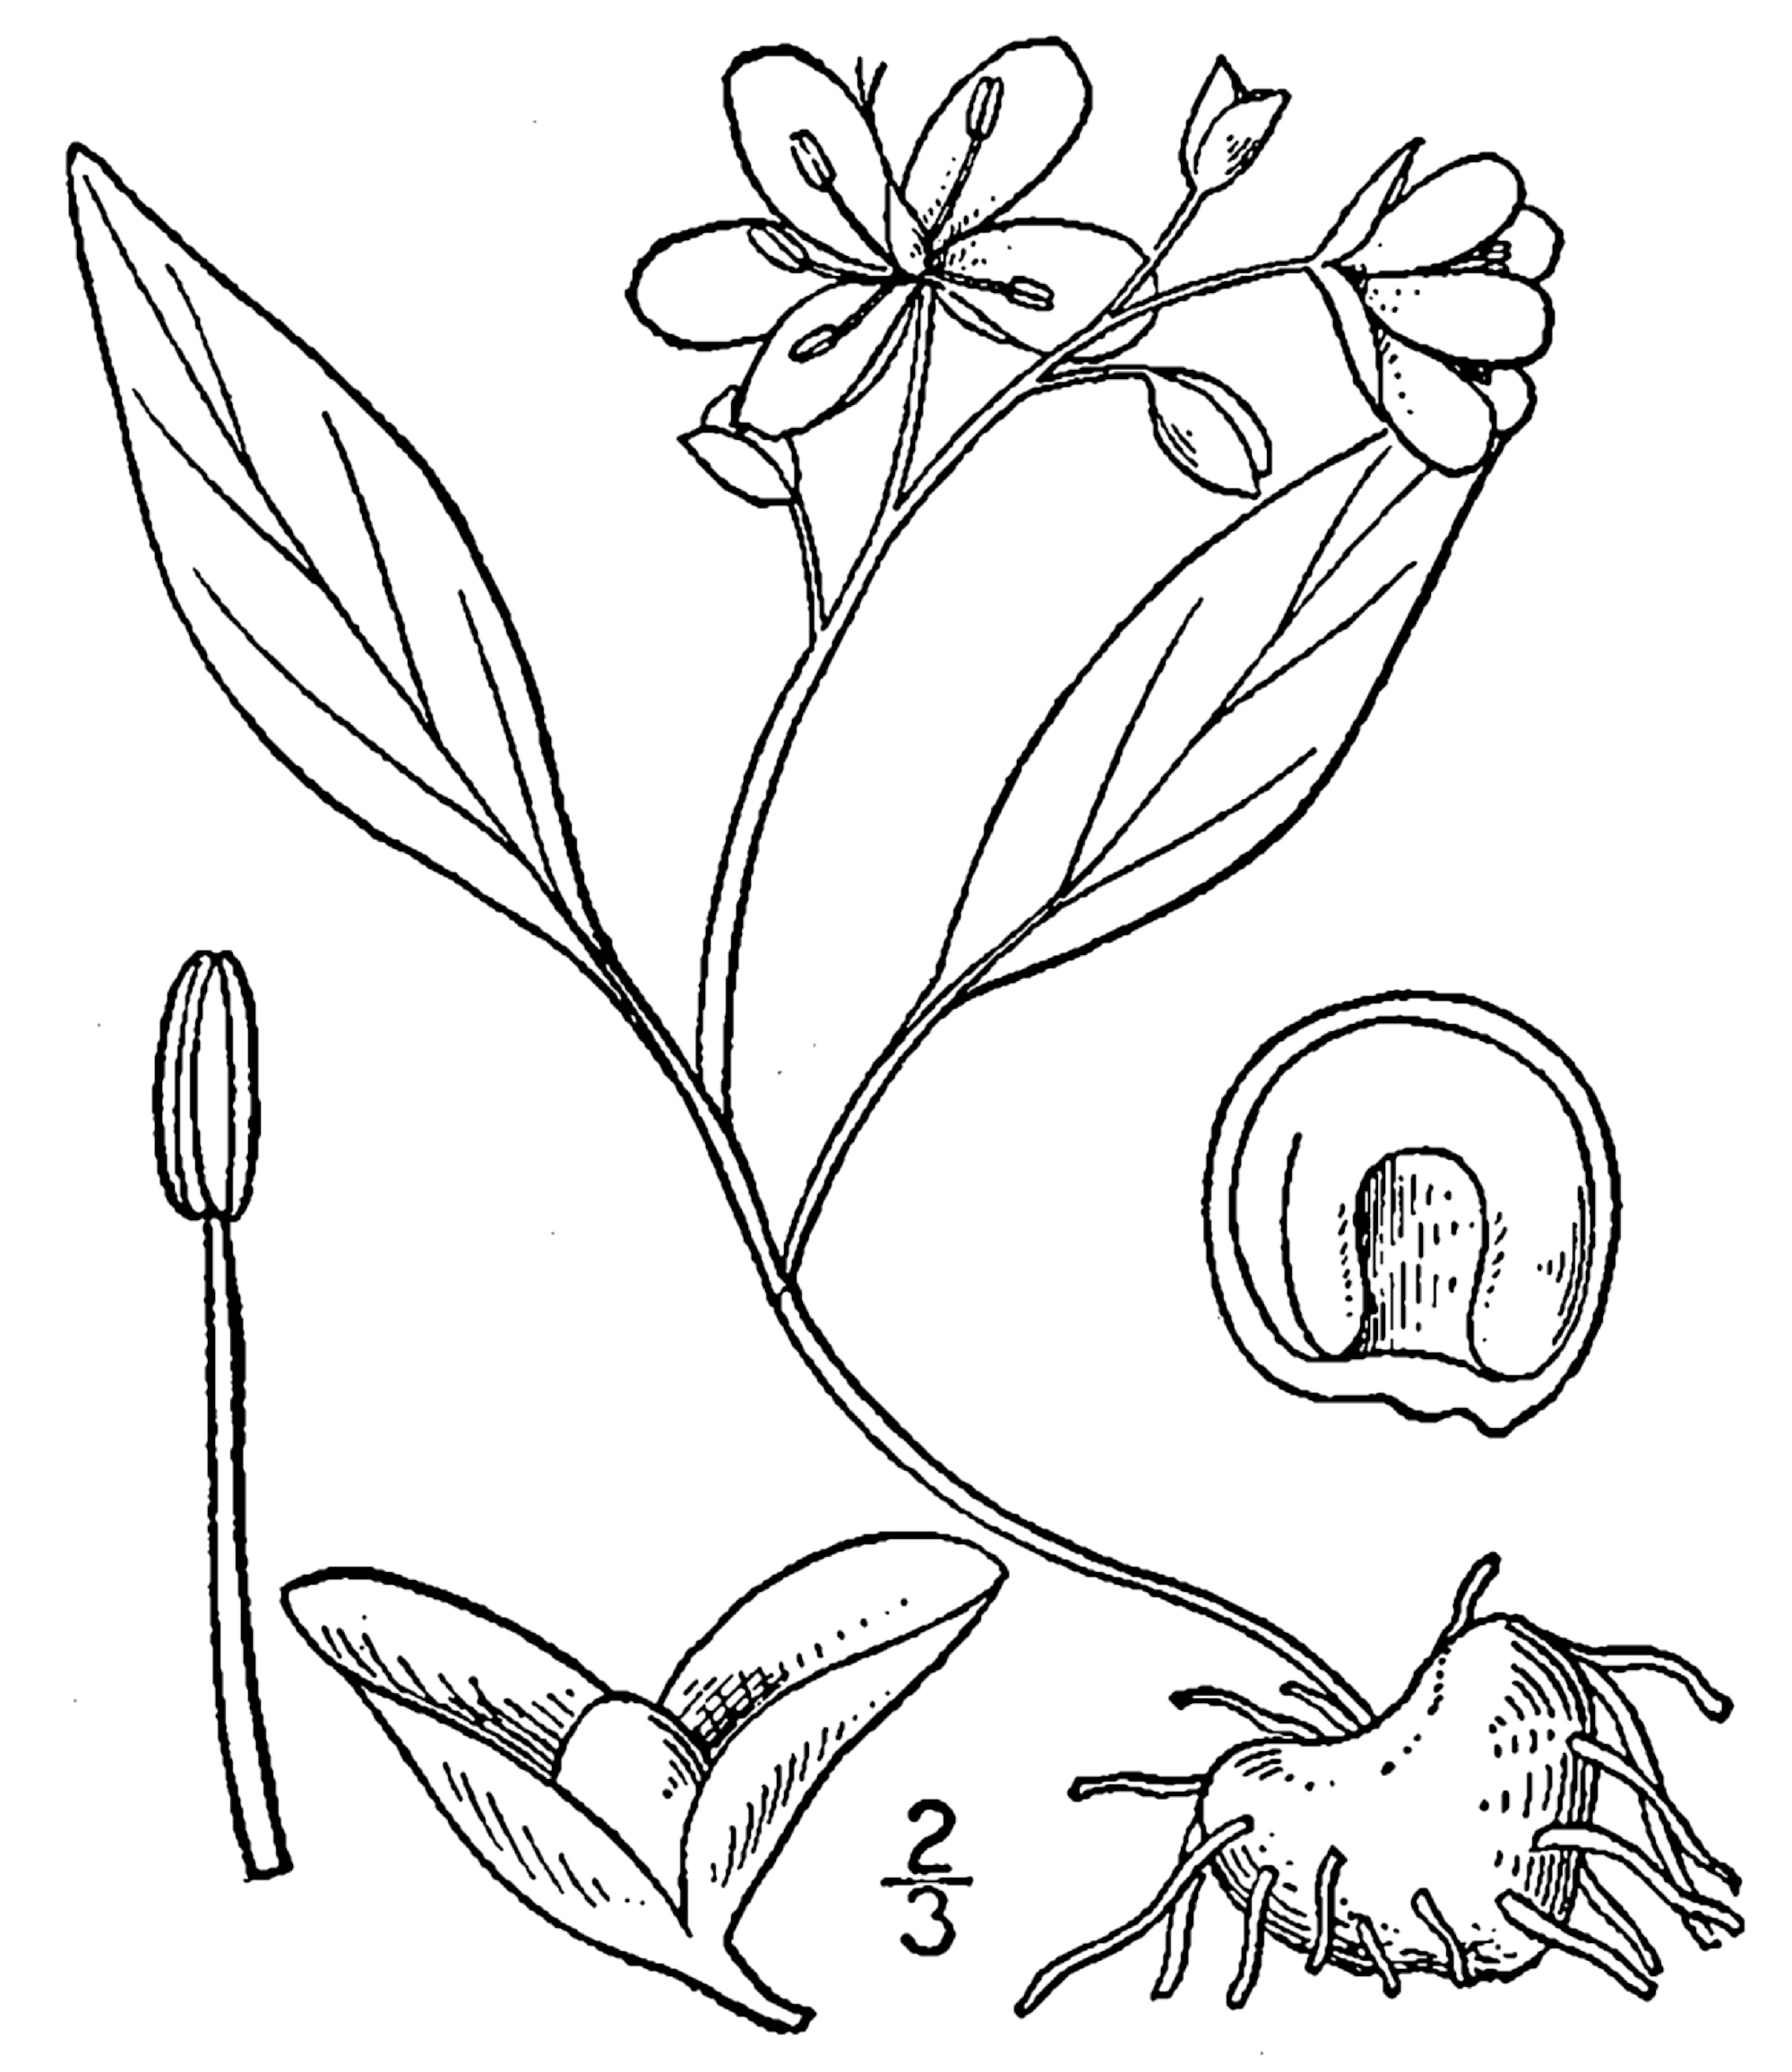 1913 illustration of Claytonia caroliniana.